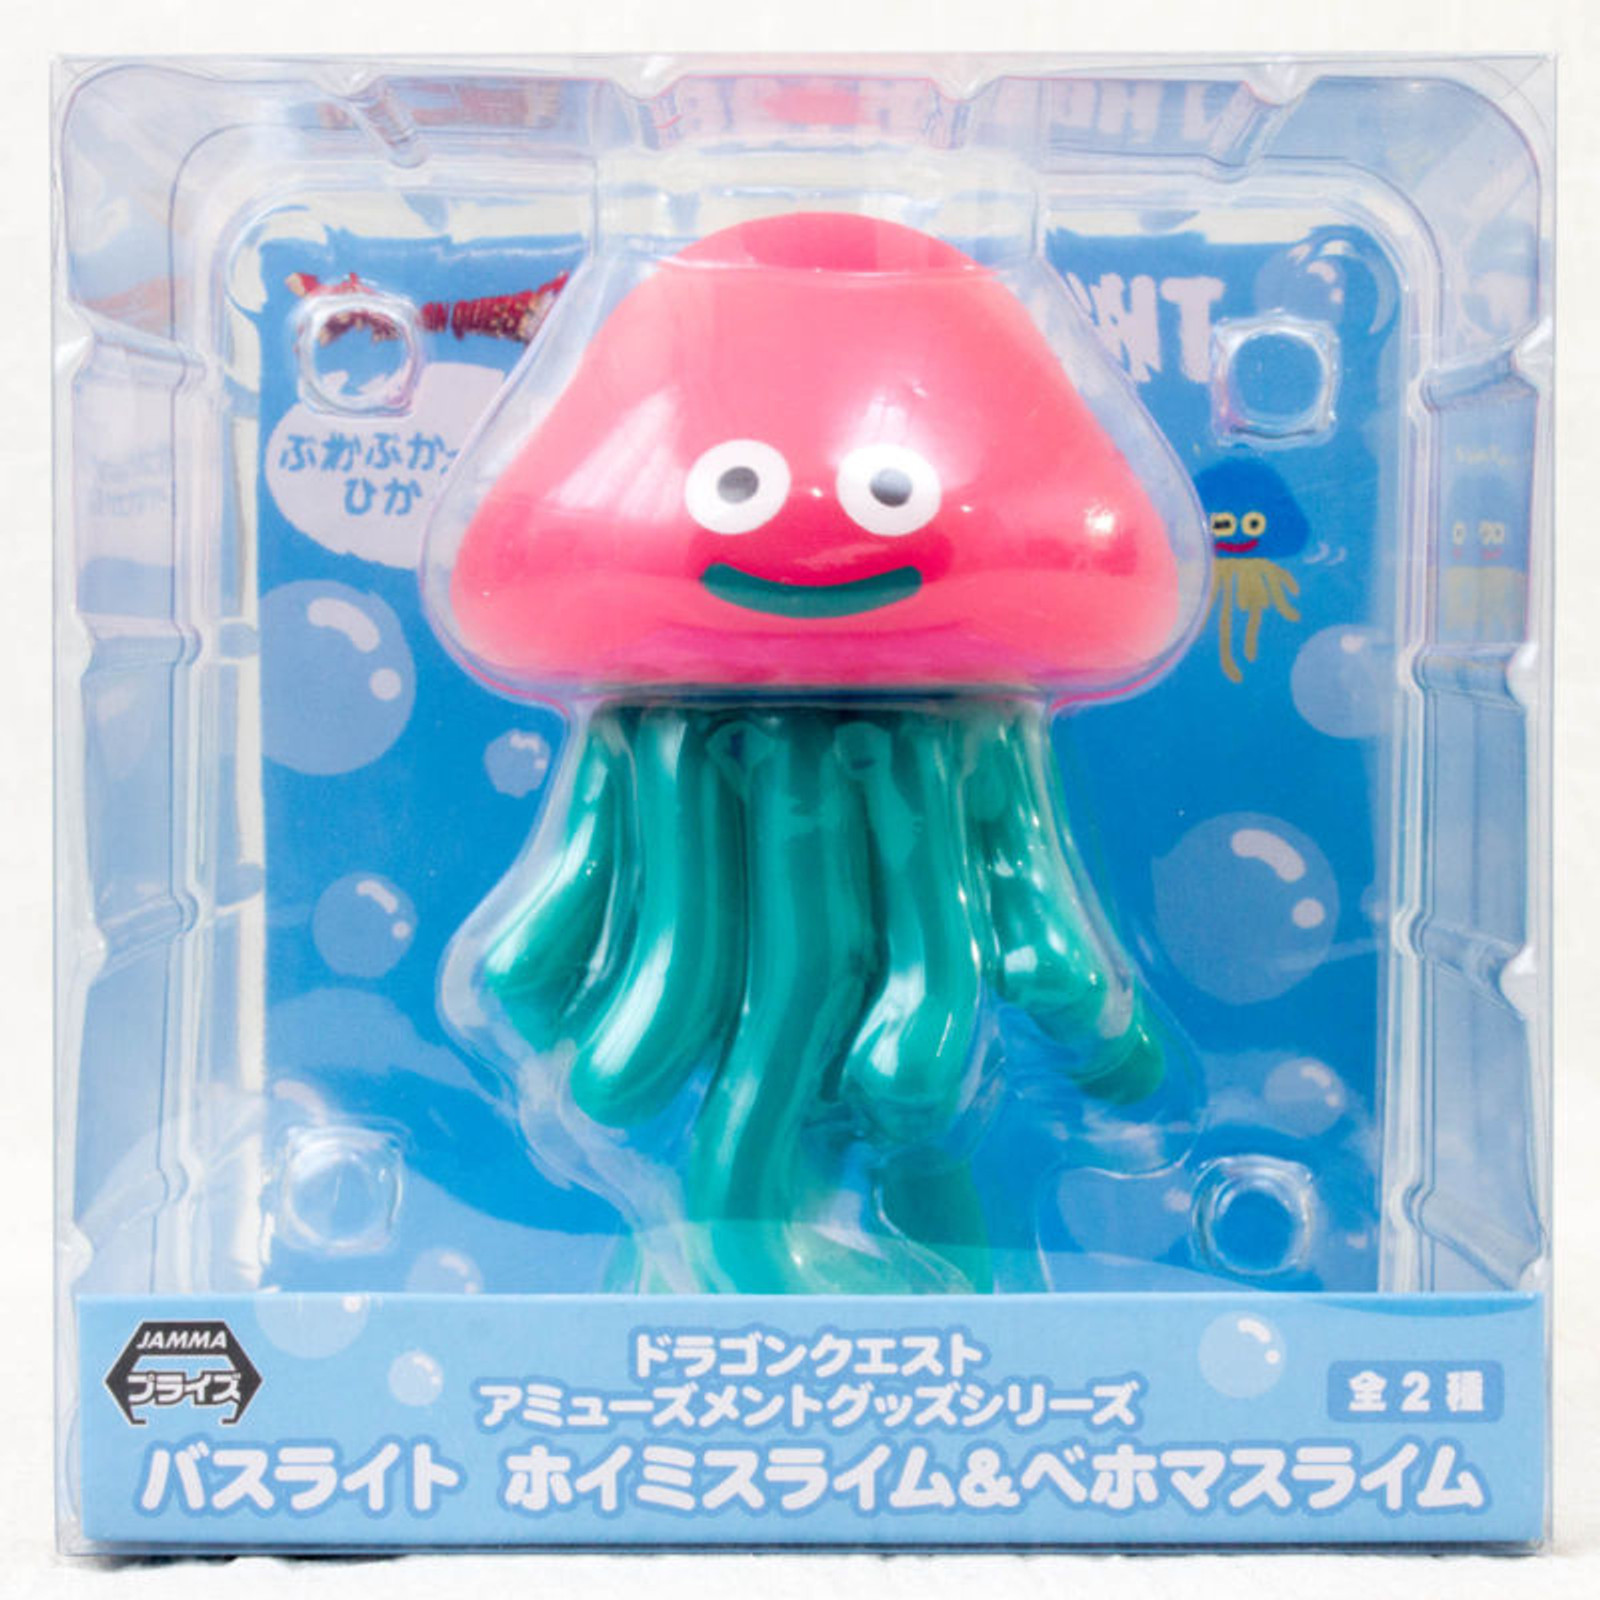 Dragon Quest Monster Behoma Slime Figure type Bath Light JAPAN ANIME